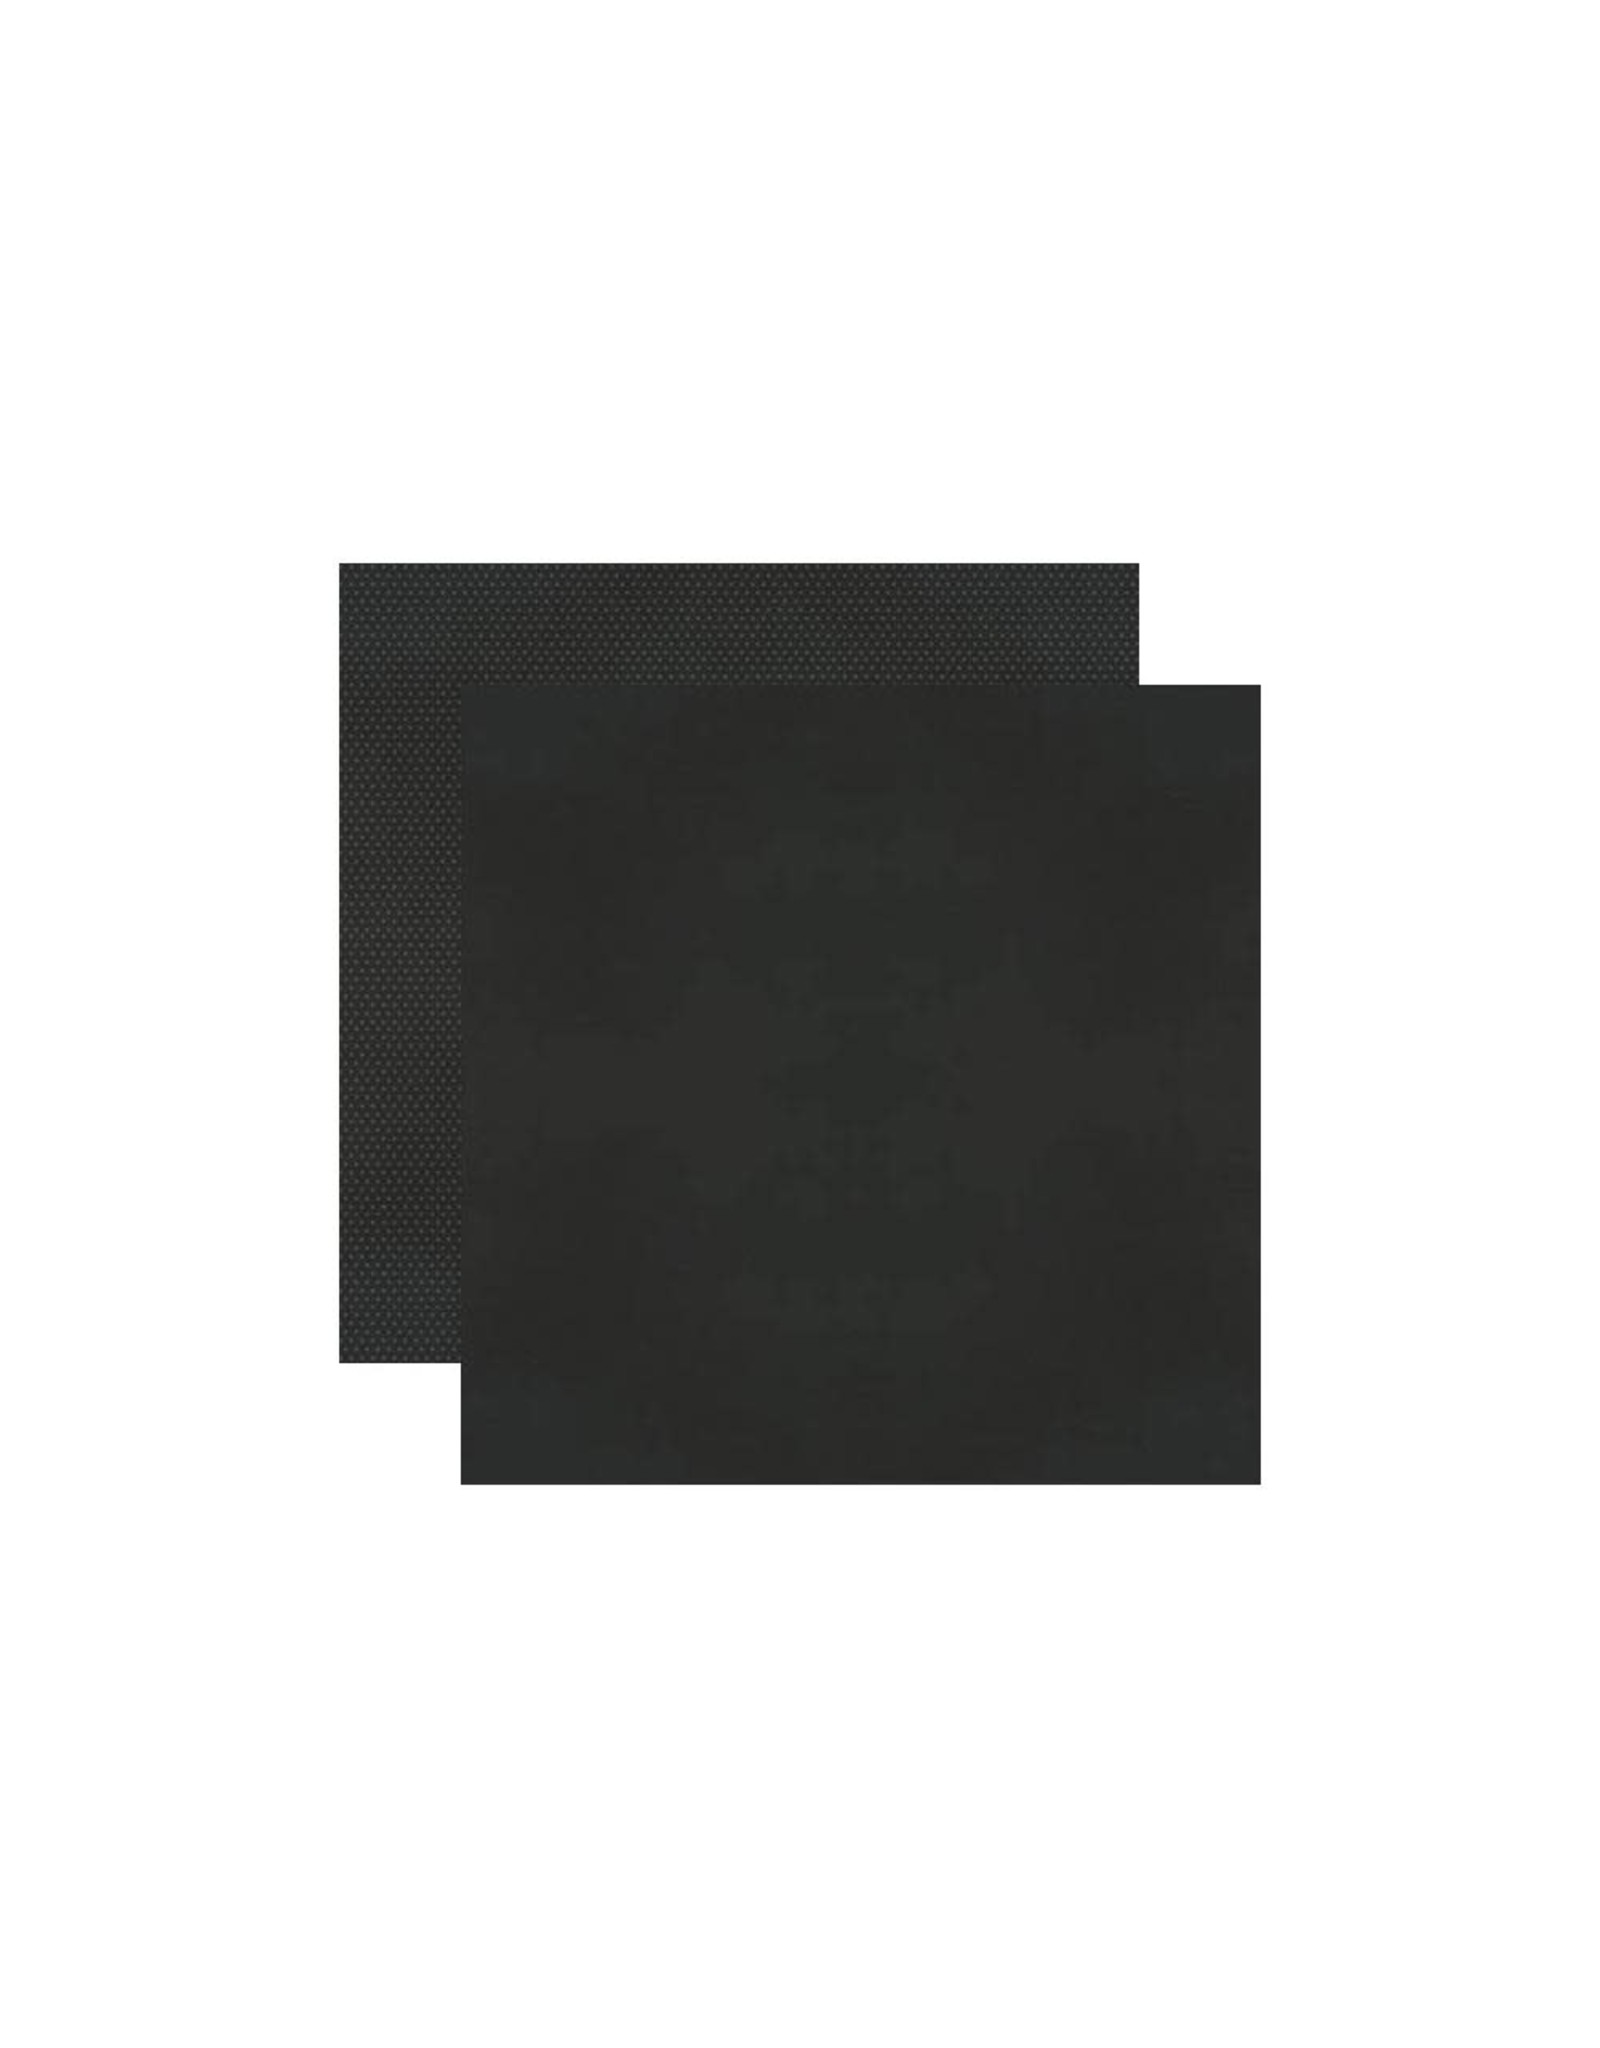 SIMPLE STORIES COLOR VIBE BLACK CARDSTOCK 12''X12'' - Scrapbook